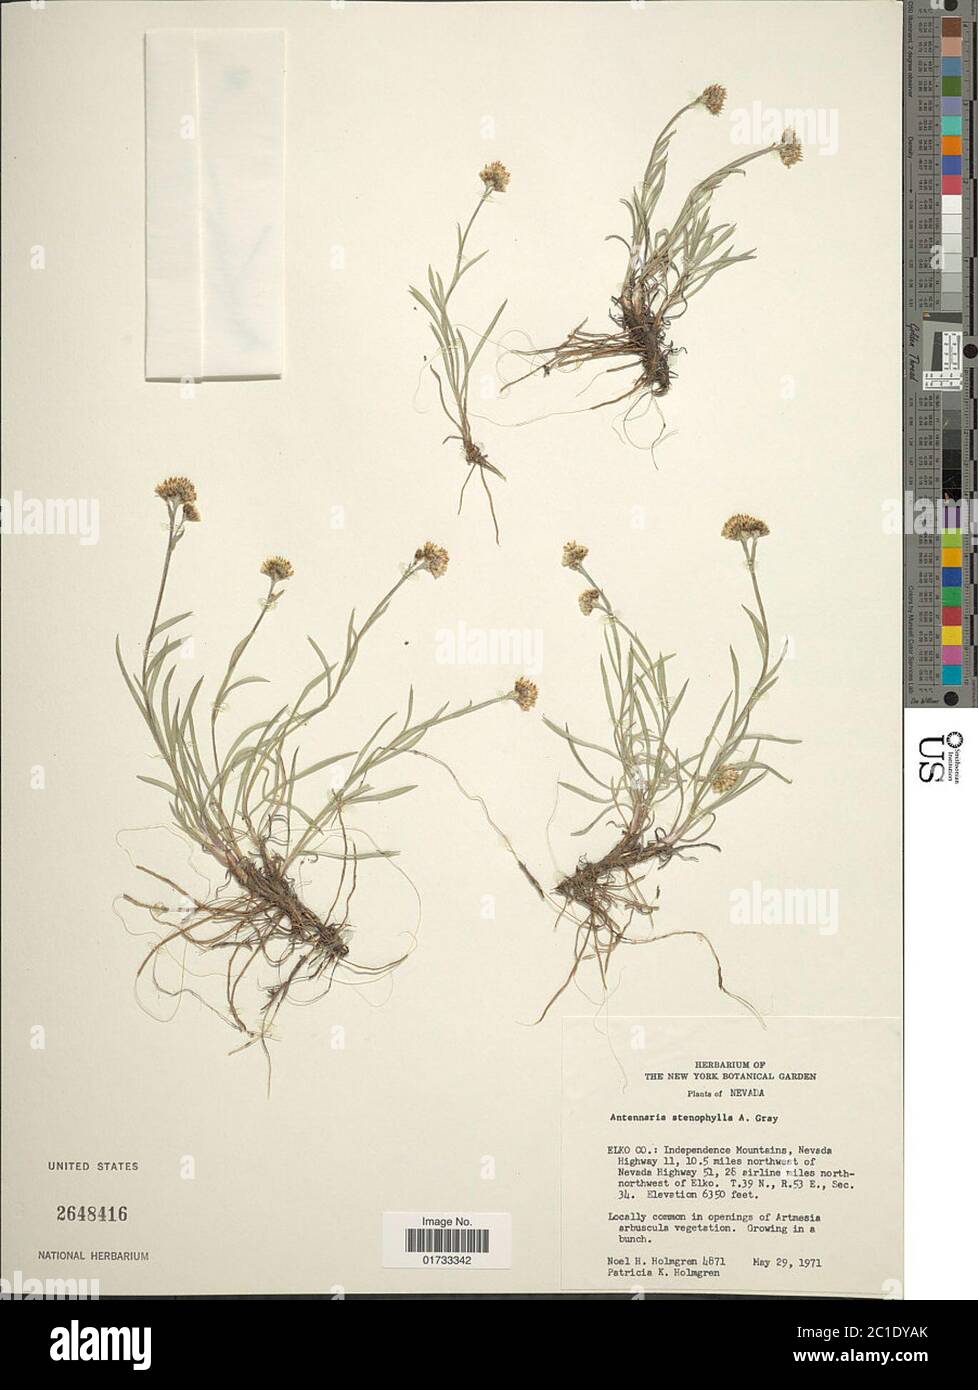 Antennaria stenophylla A Gray A Gray Antennaria stenophylla A Gray A Gray. Stock Photo